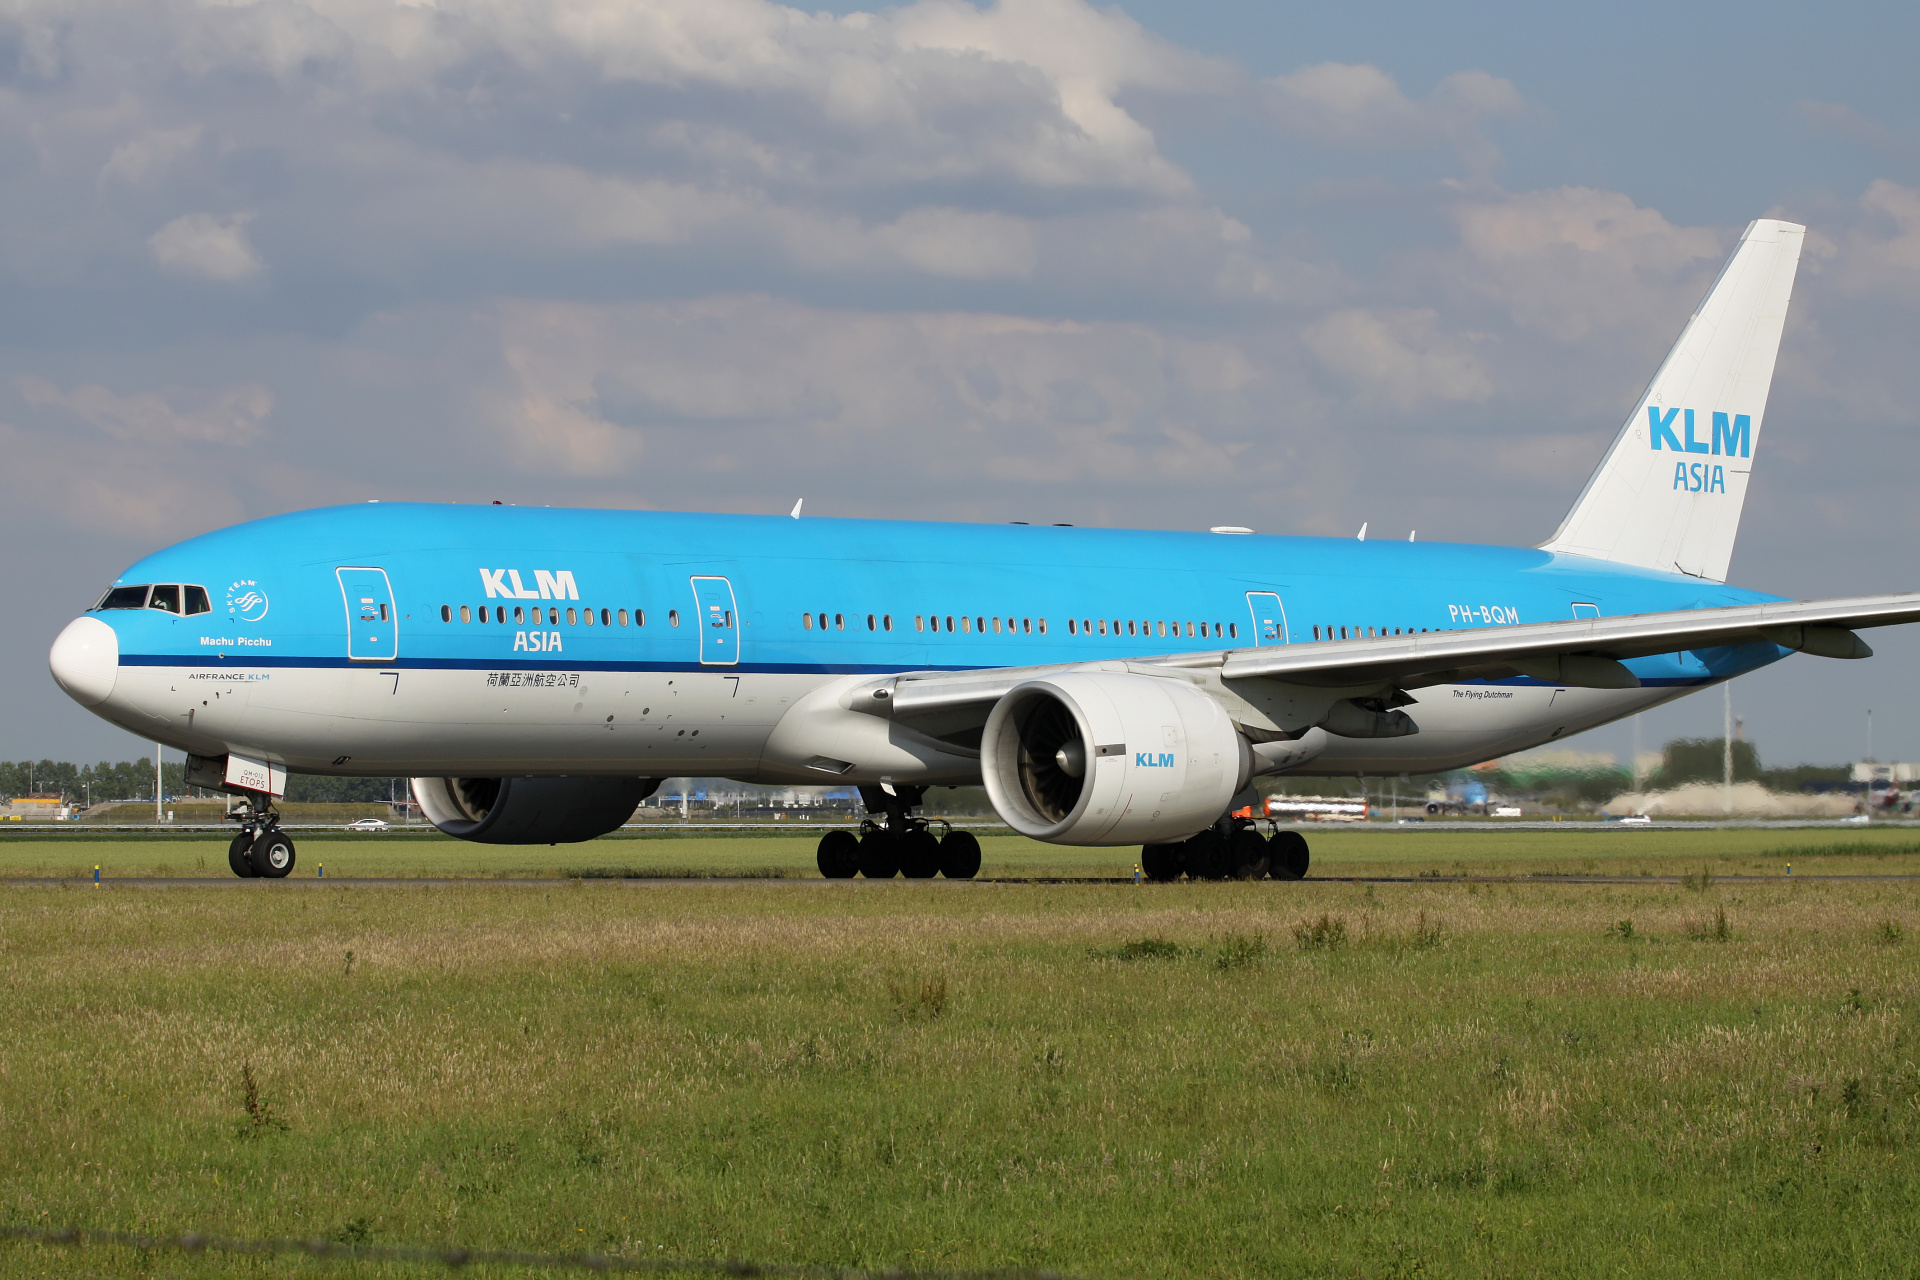 PH-BQM (KLM Asia livery) (Aircraft » Schiphol Spotting » Boeing 777-200/-ER » KLM Royal Dutch Airlines)